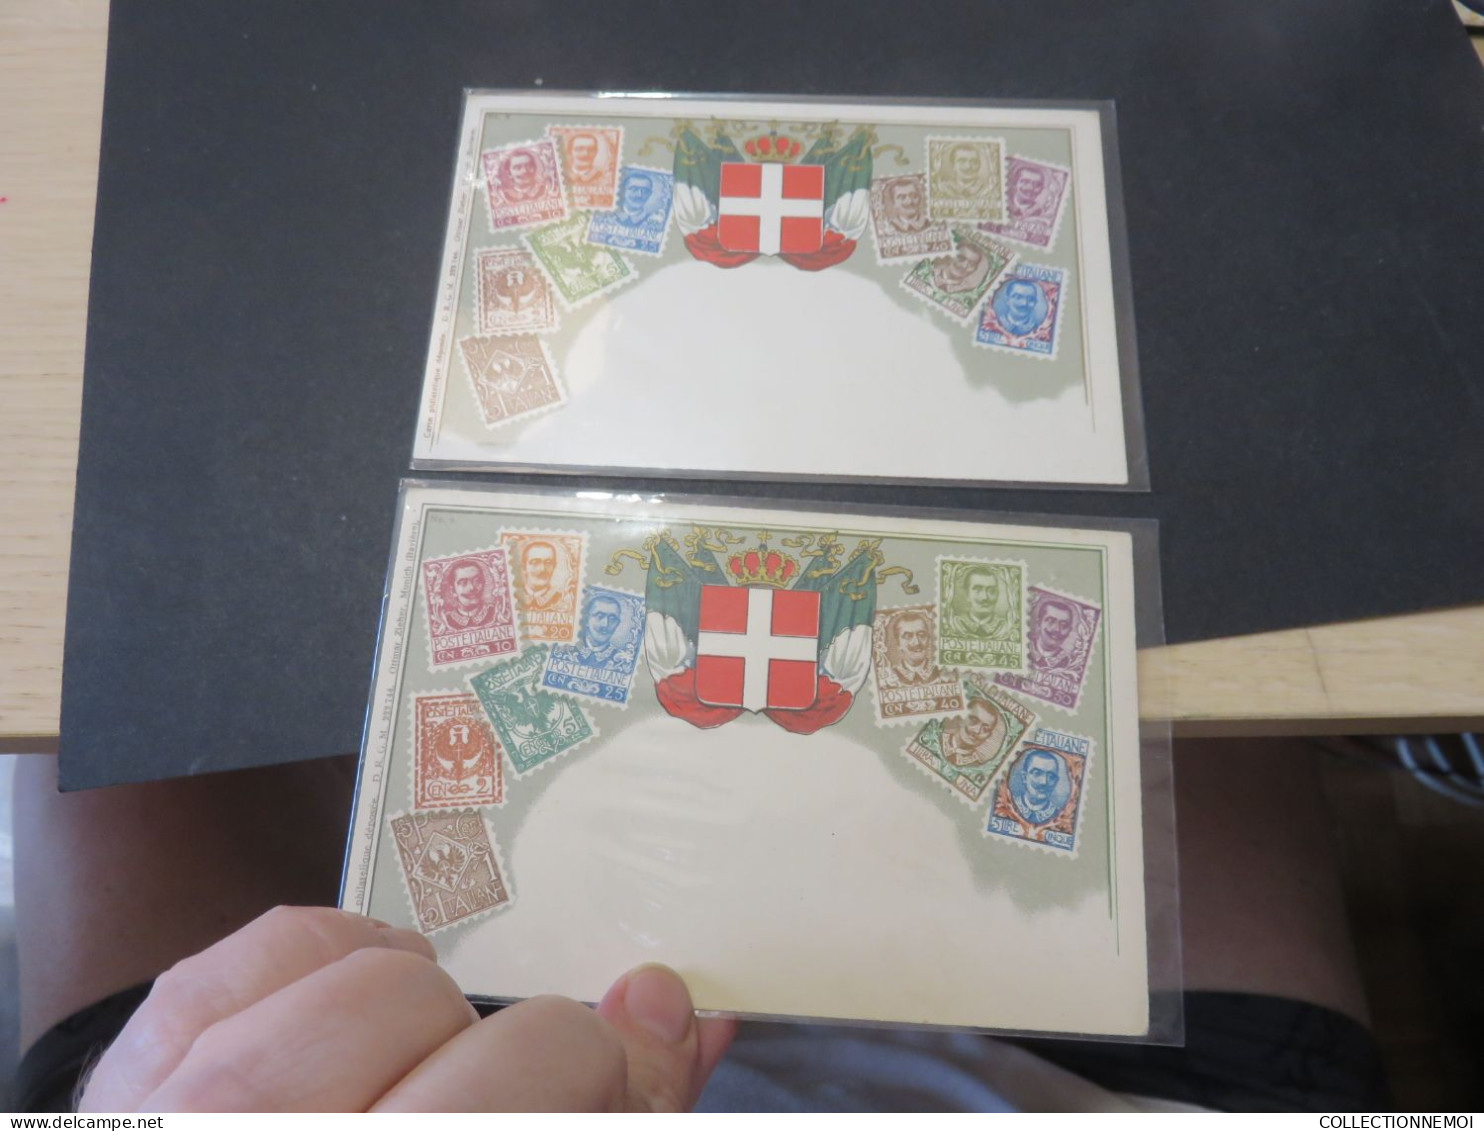 5 cartes de timbres sur cartes